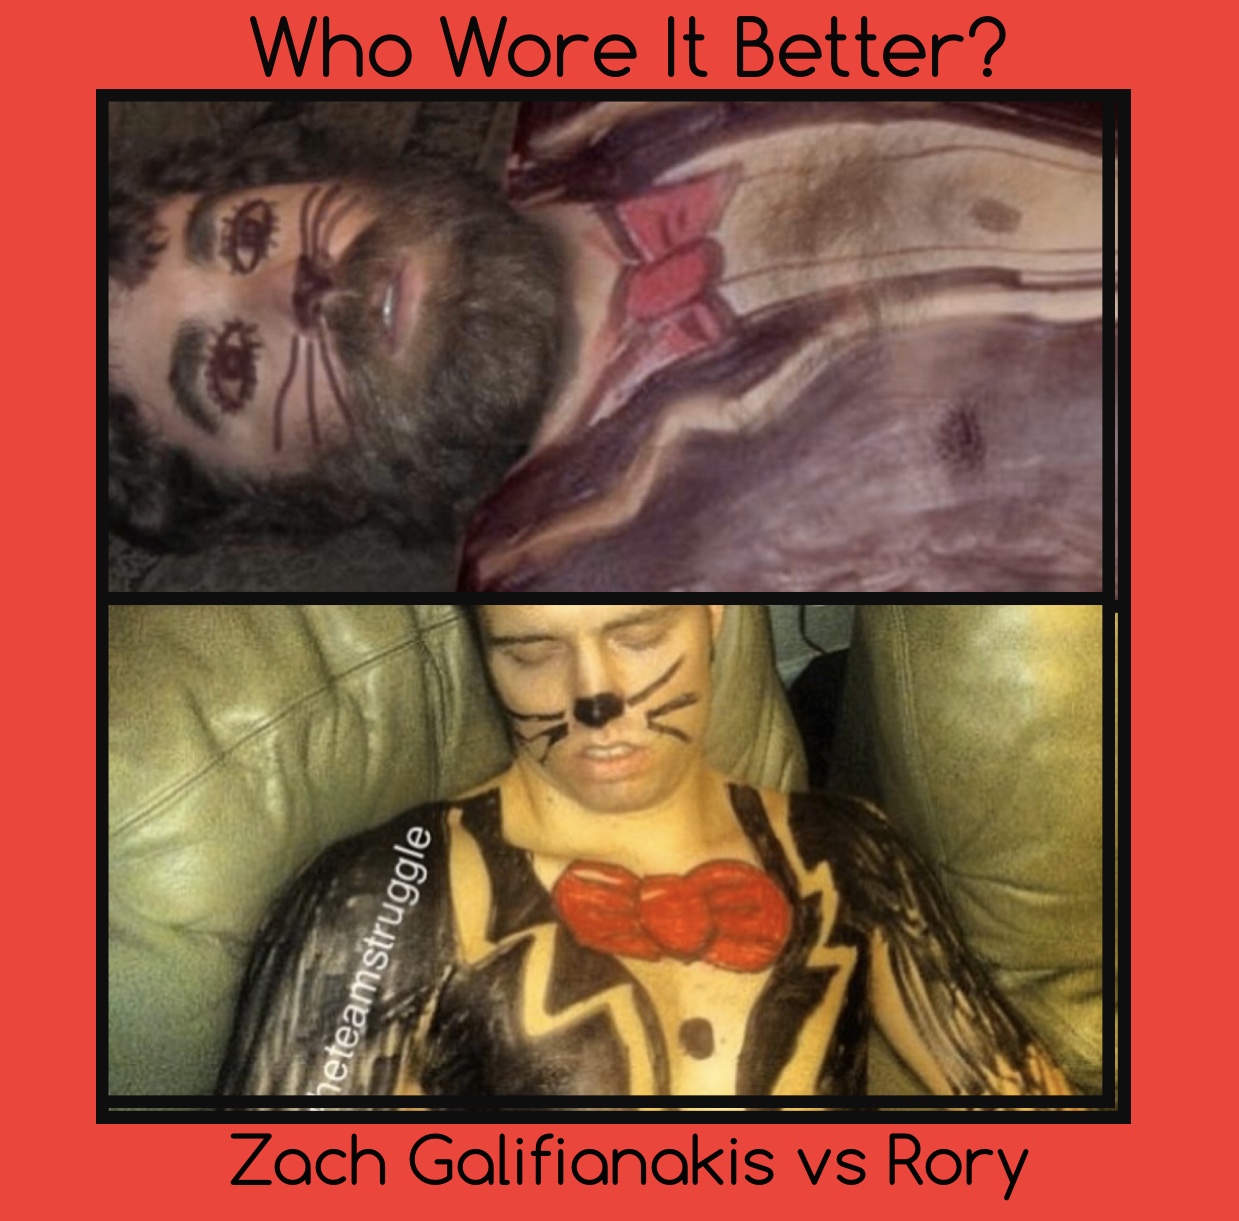 drunk sharpie tuxedo - Who wore it better? heteamstruggle Zach Galifianakis vs Rory